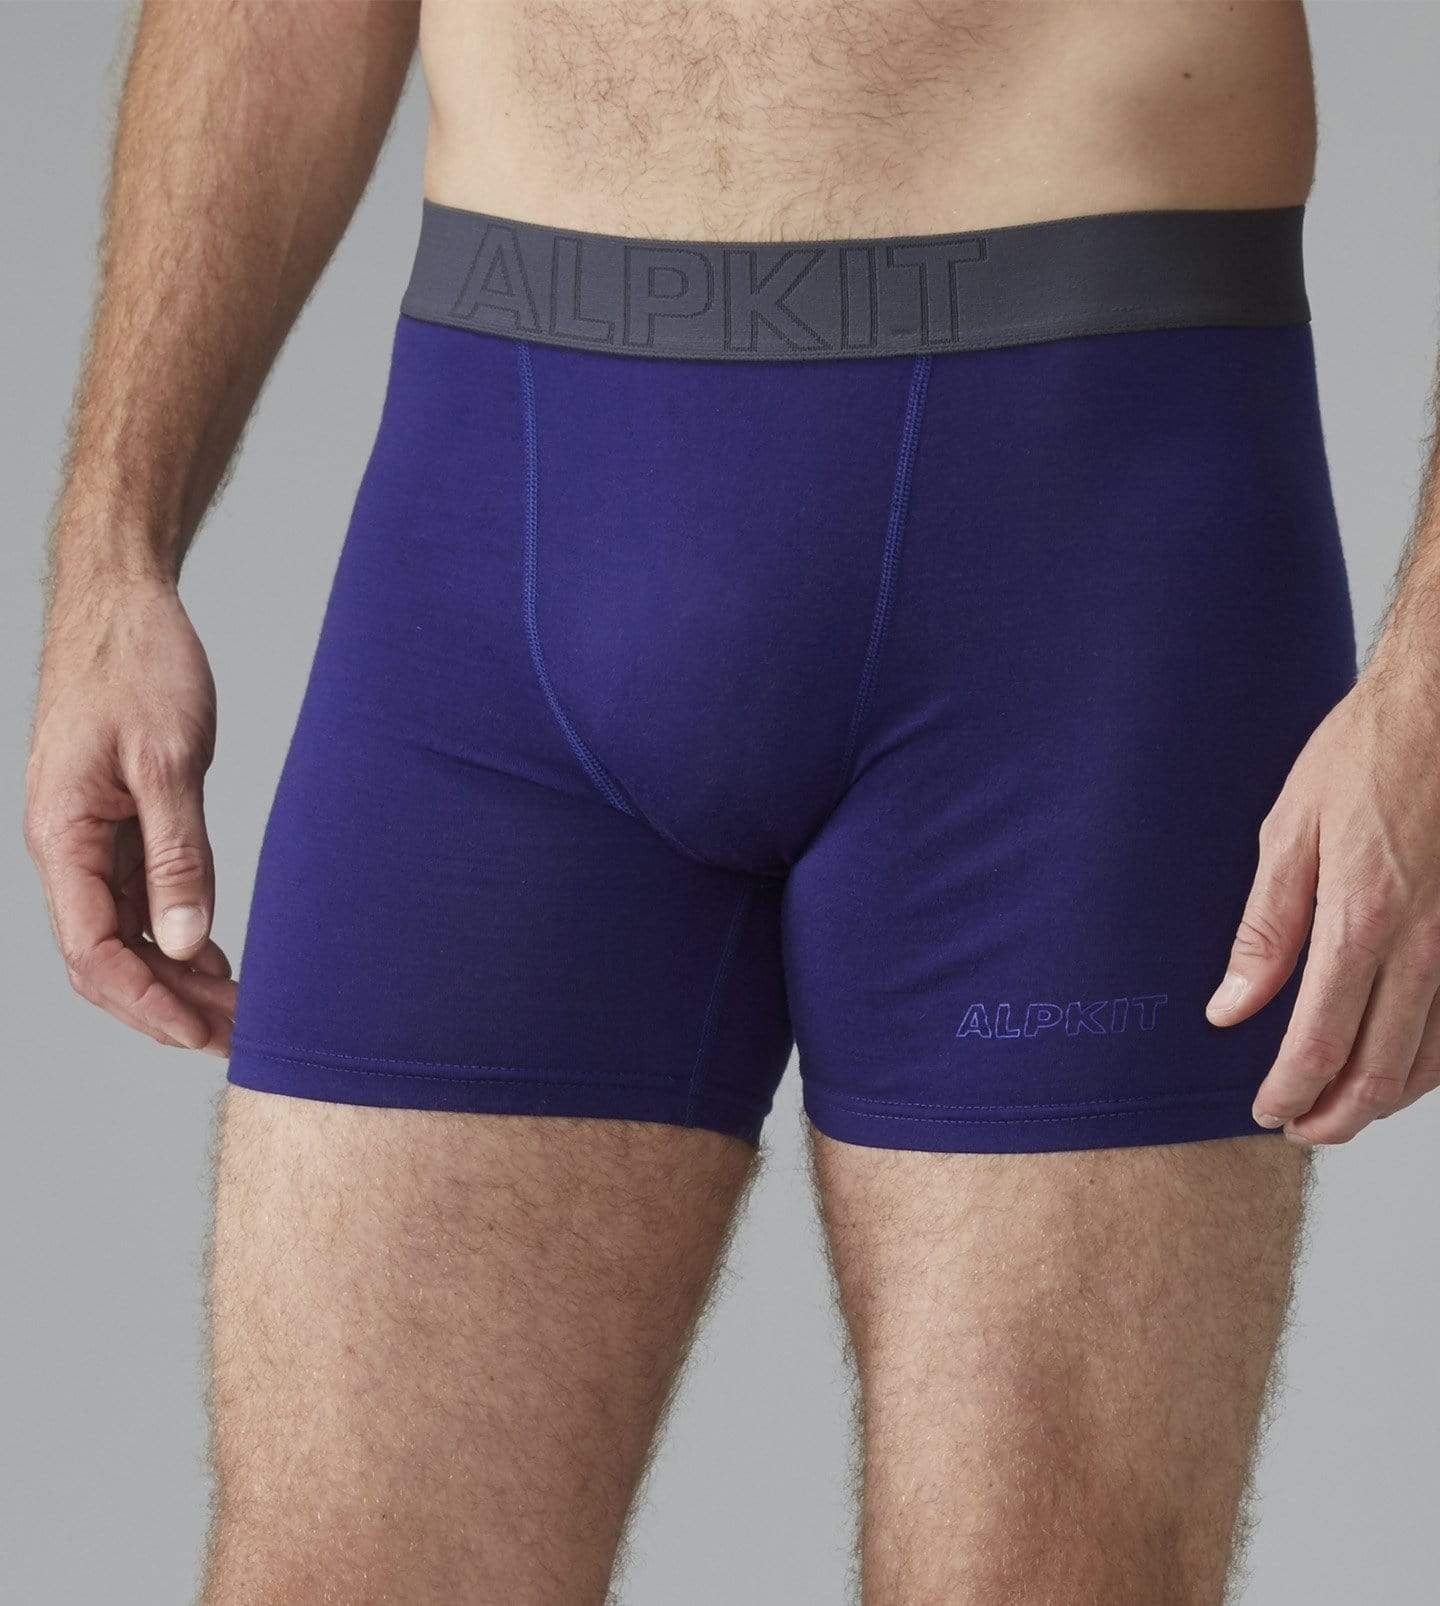 Kepler Boxers Men's Ultrafine Merino Underwear